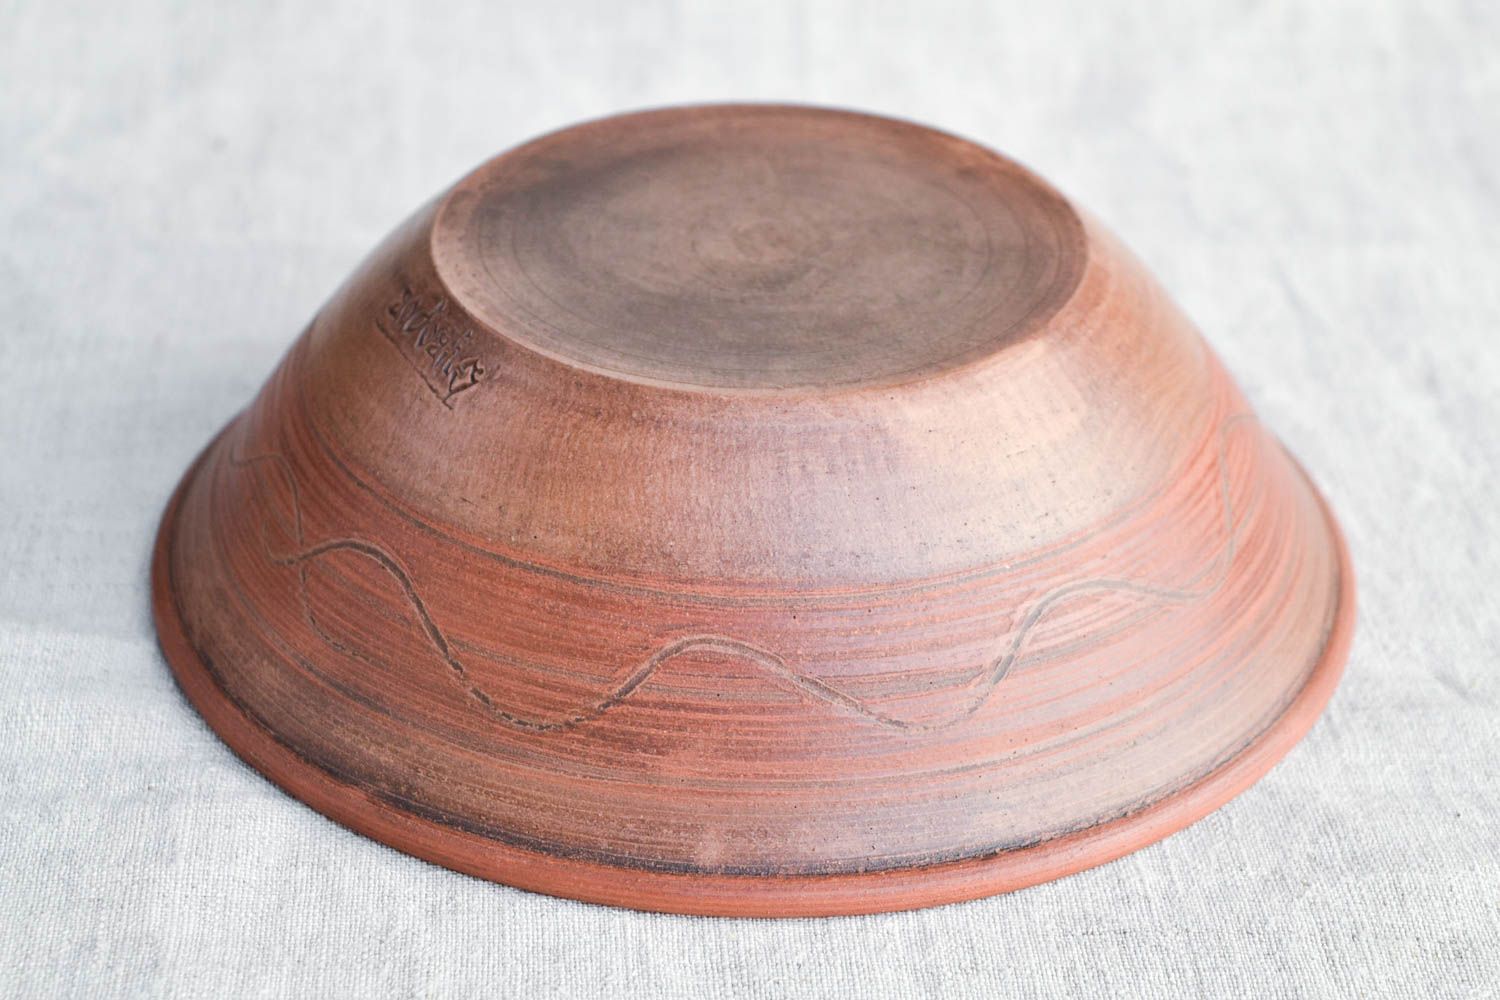 Handmade ceramic dinnerware pottery bowl ceramic plate kitchen decorating ideas photo 5